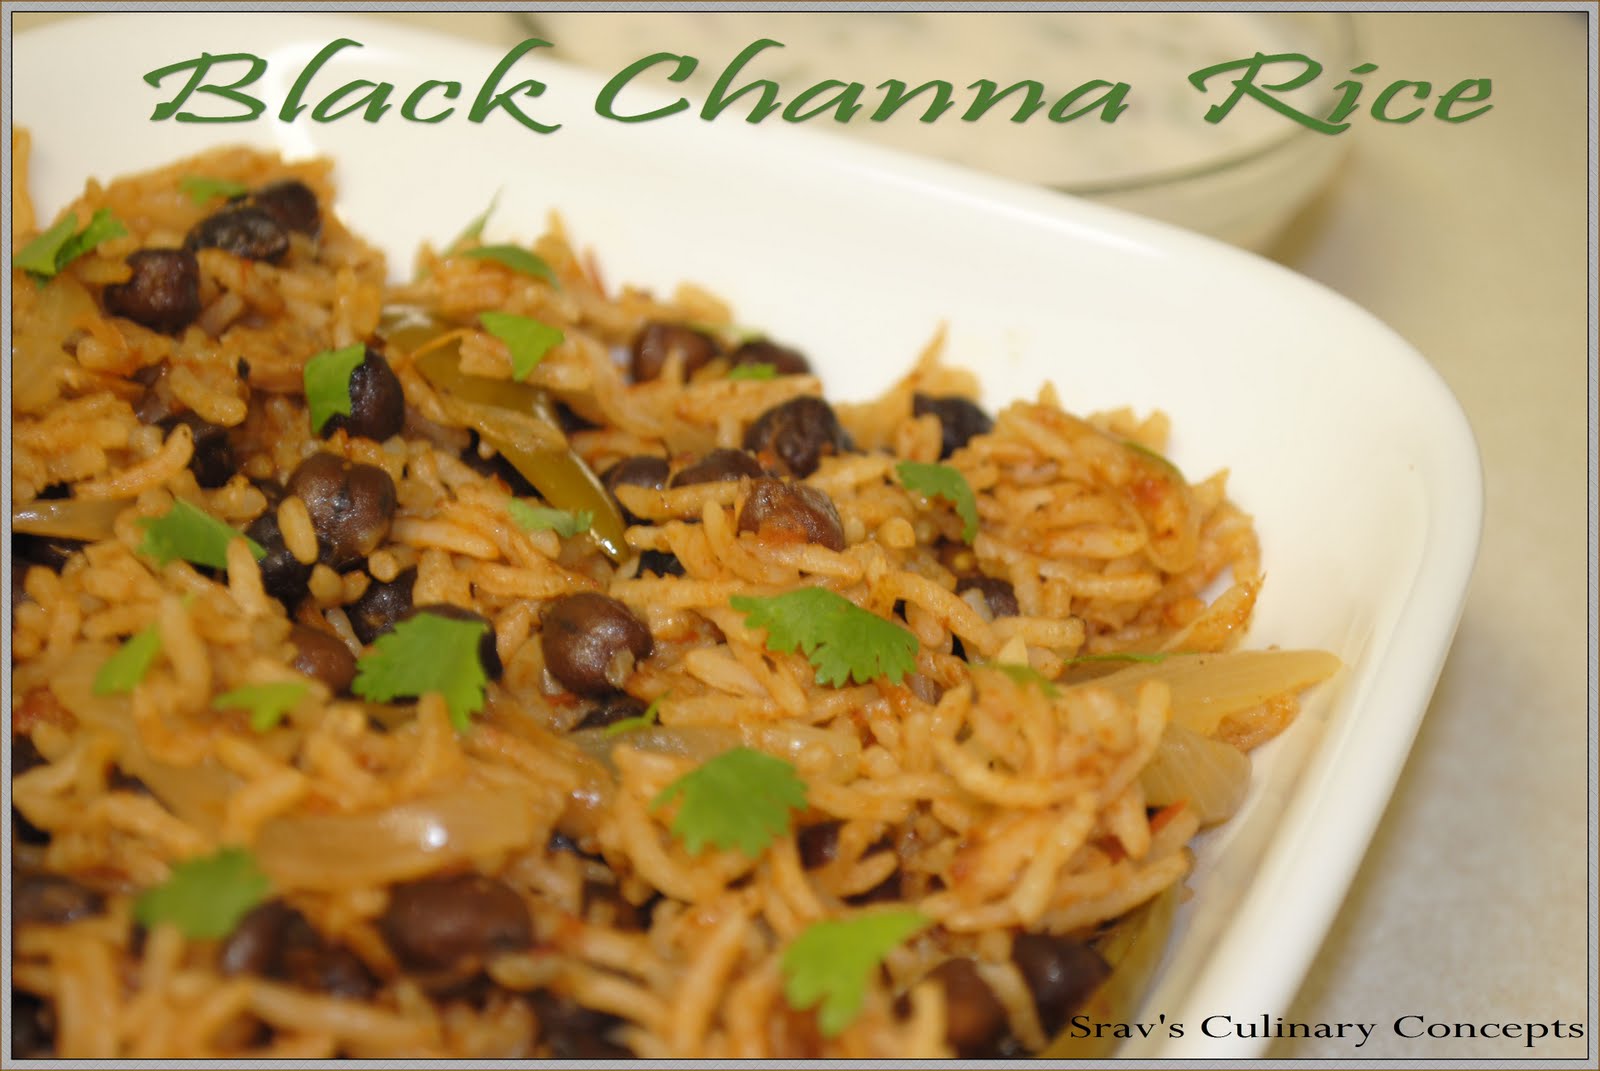 Black channa rice